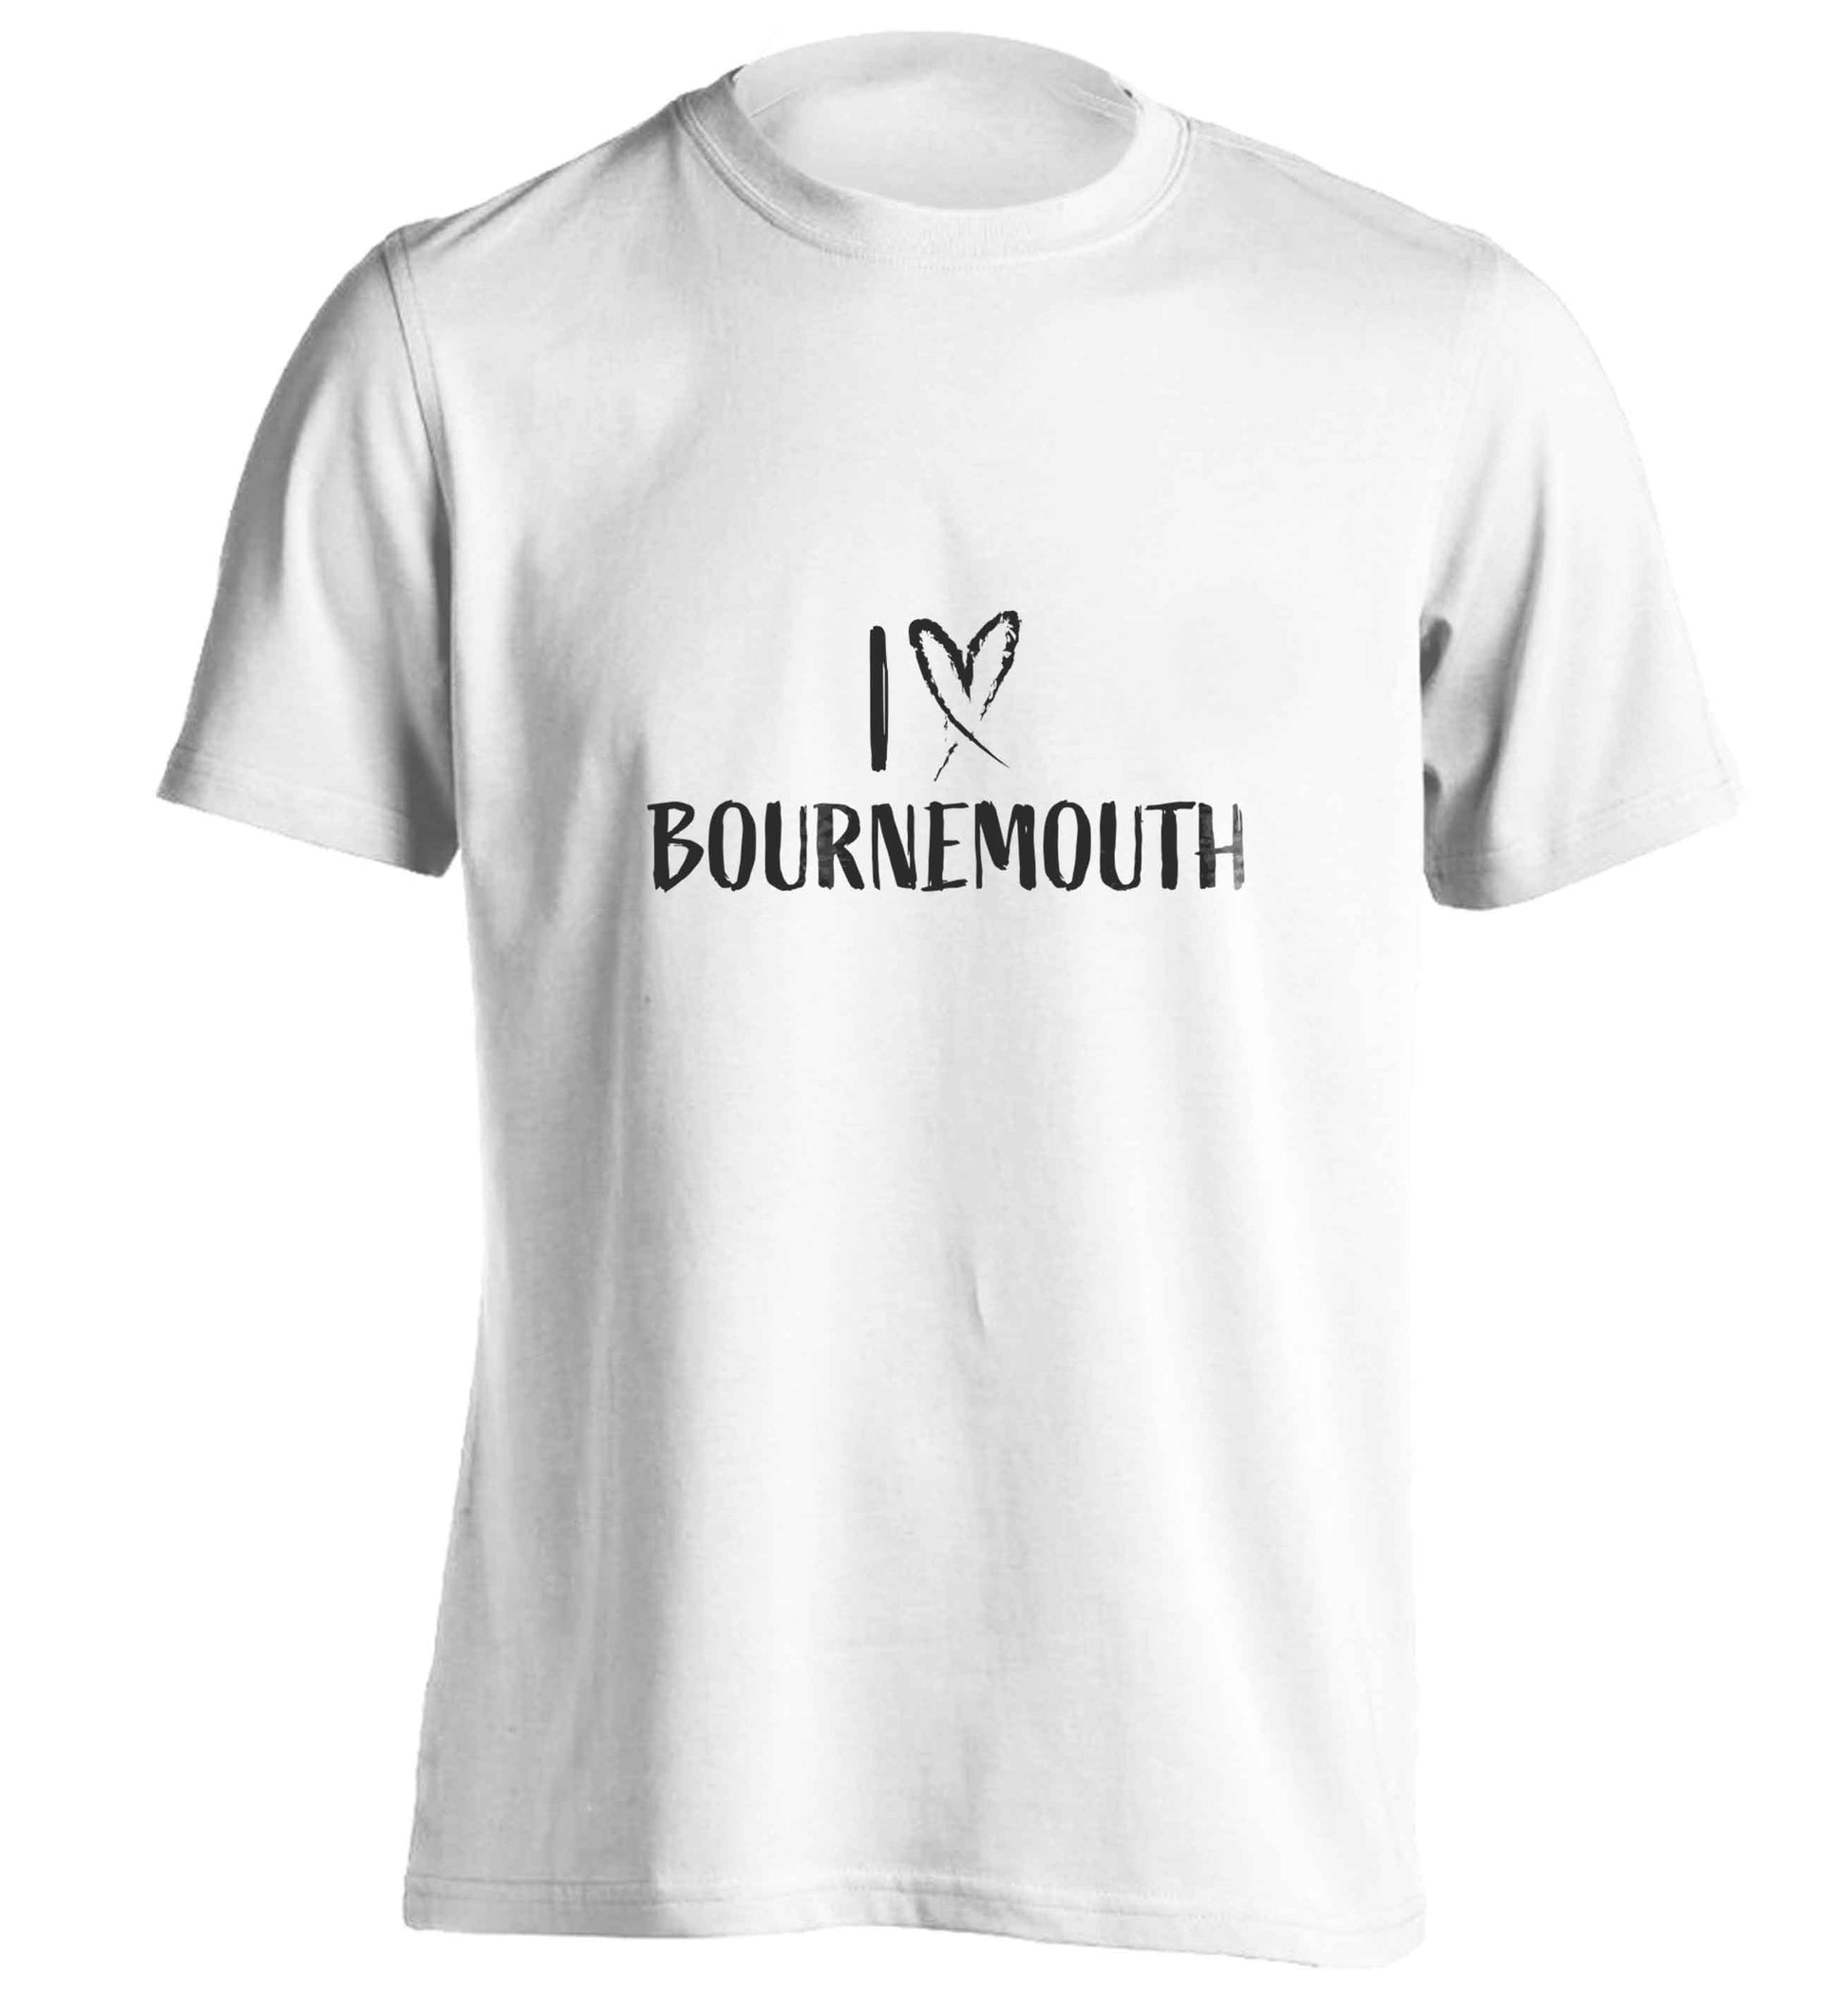 I love Bournemouth adults unisex white Tshirt 2XL